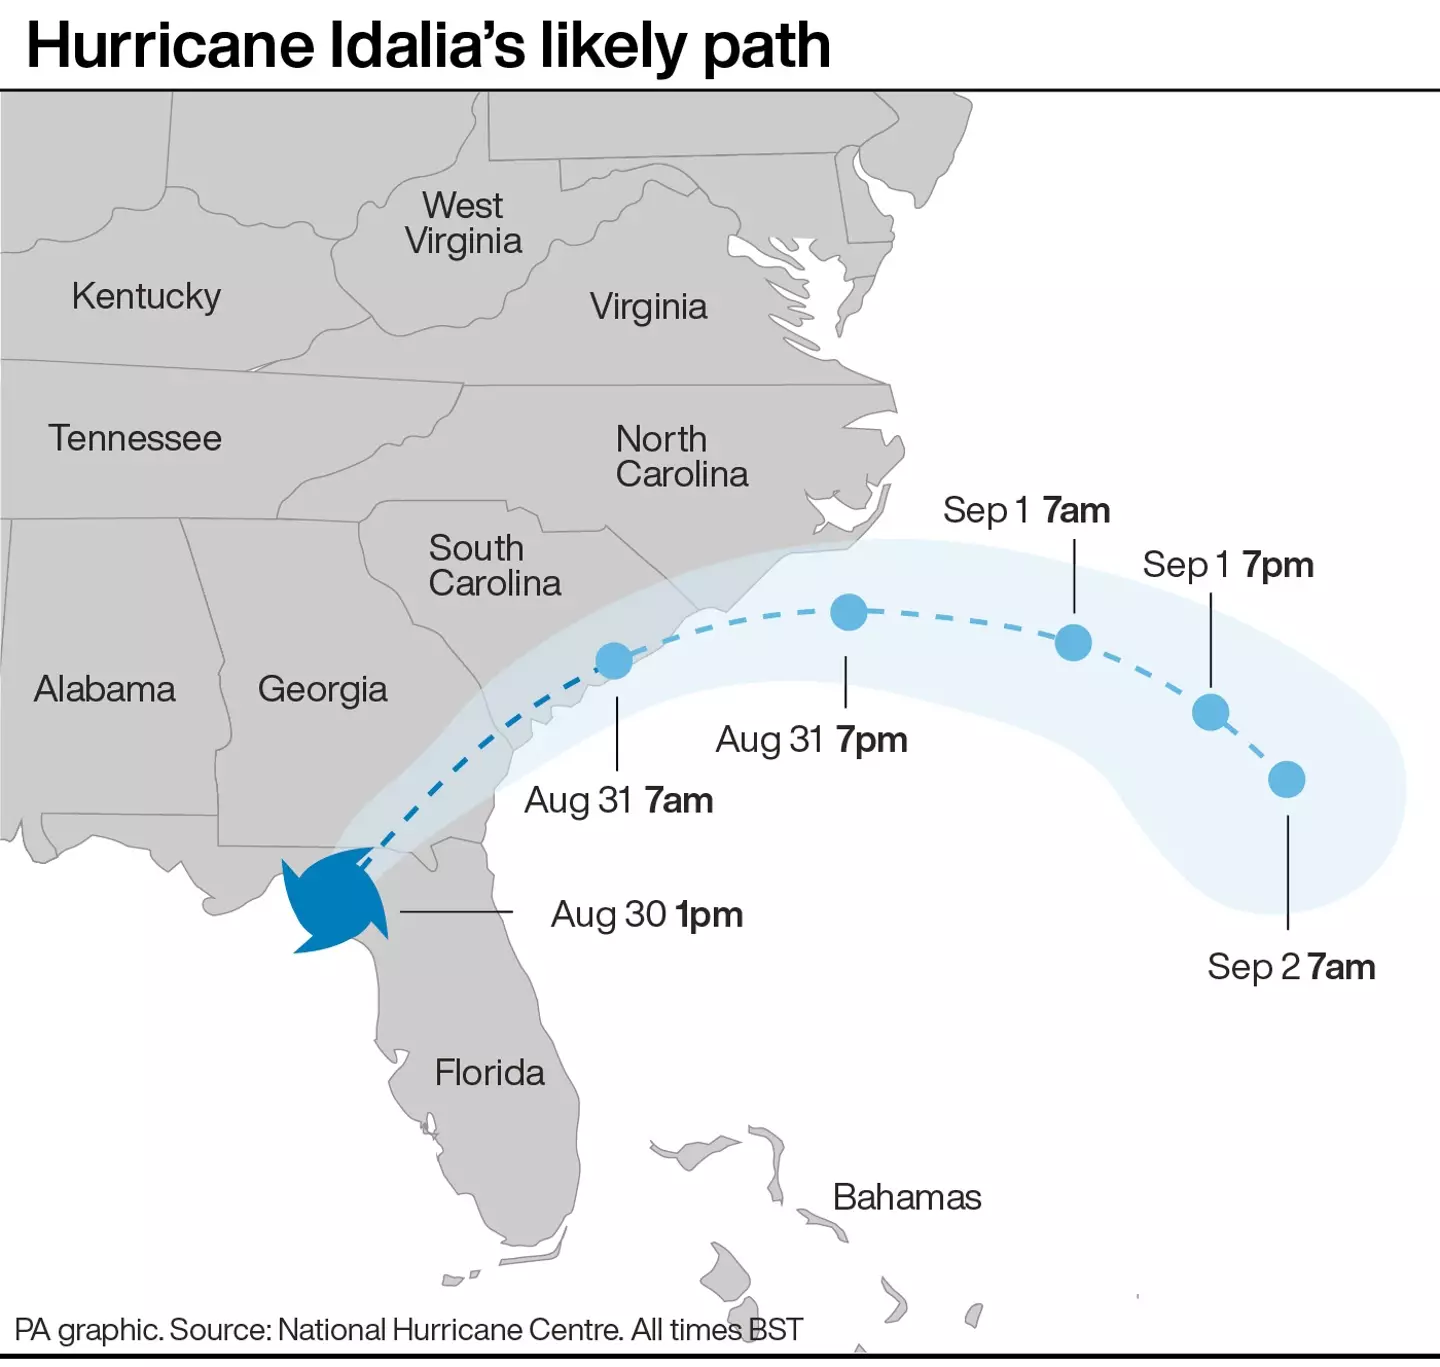 Hurricane Idalia's likely path.